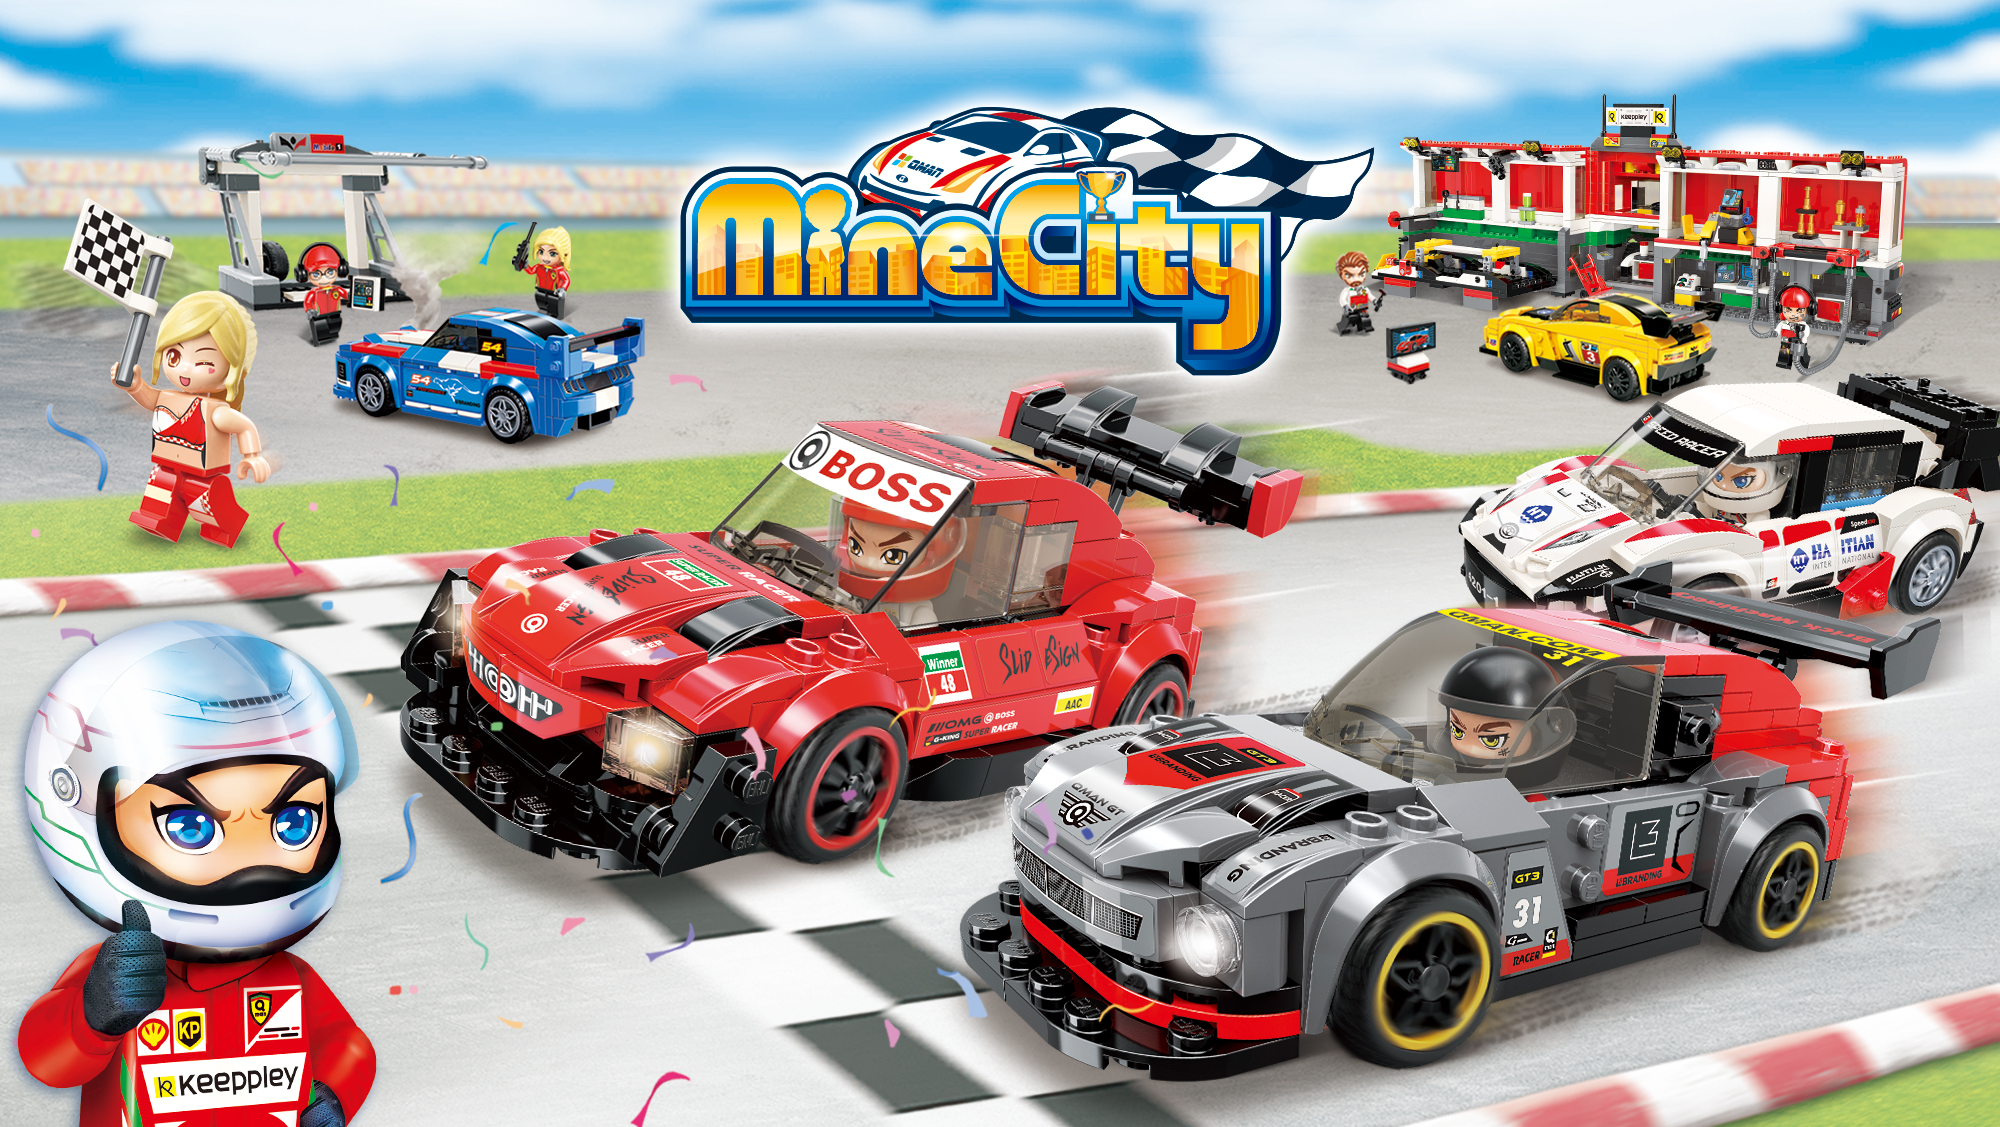 Lego-Qman-Minecity-Racing Car